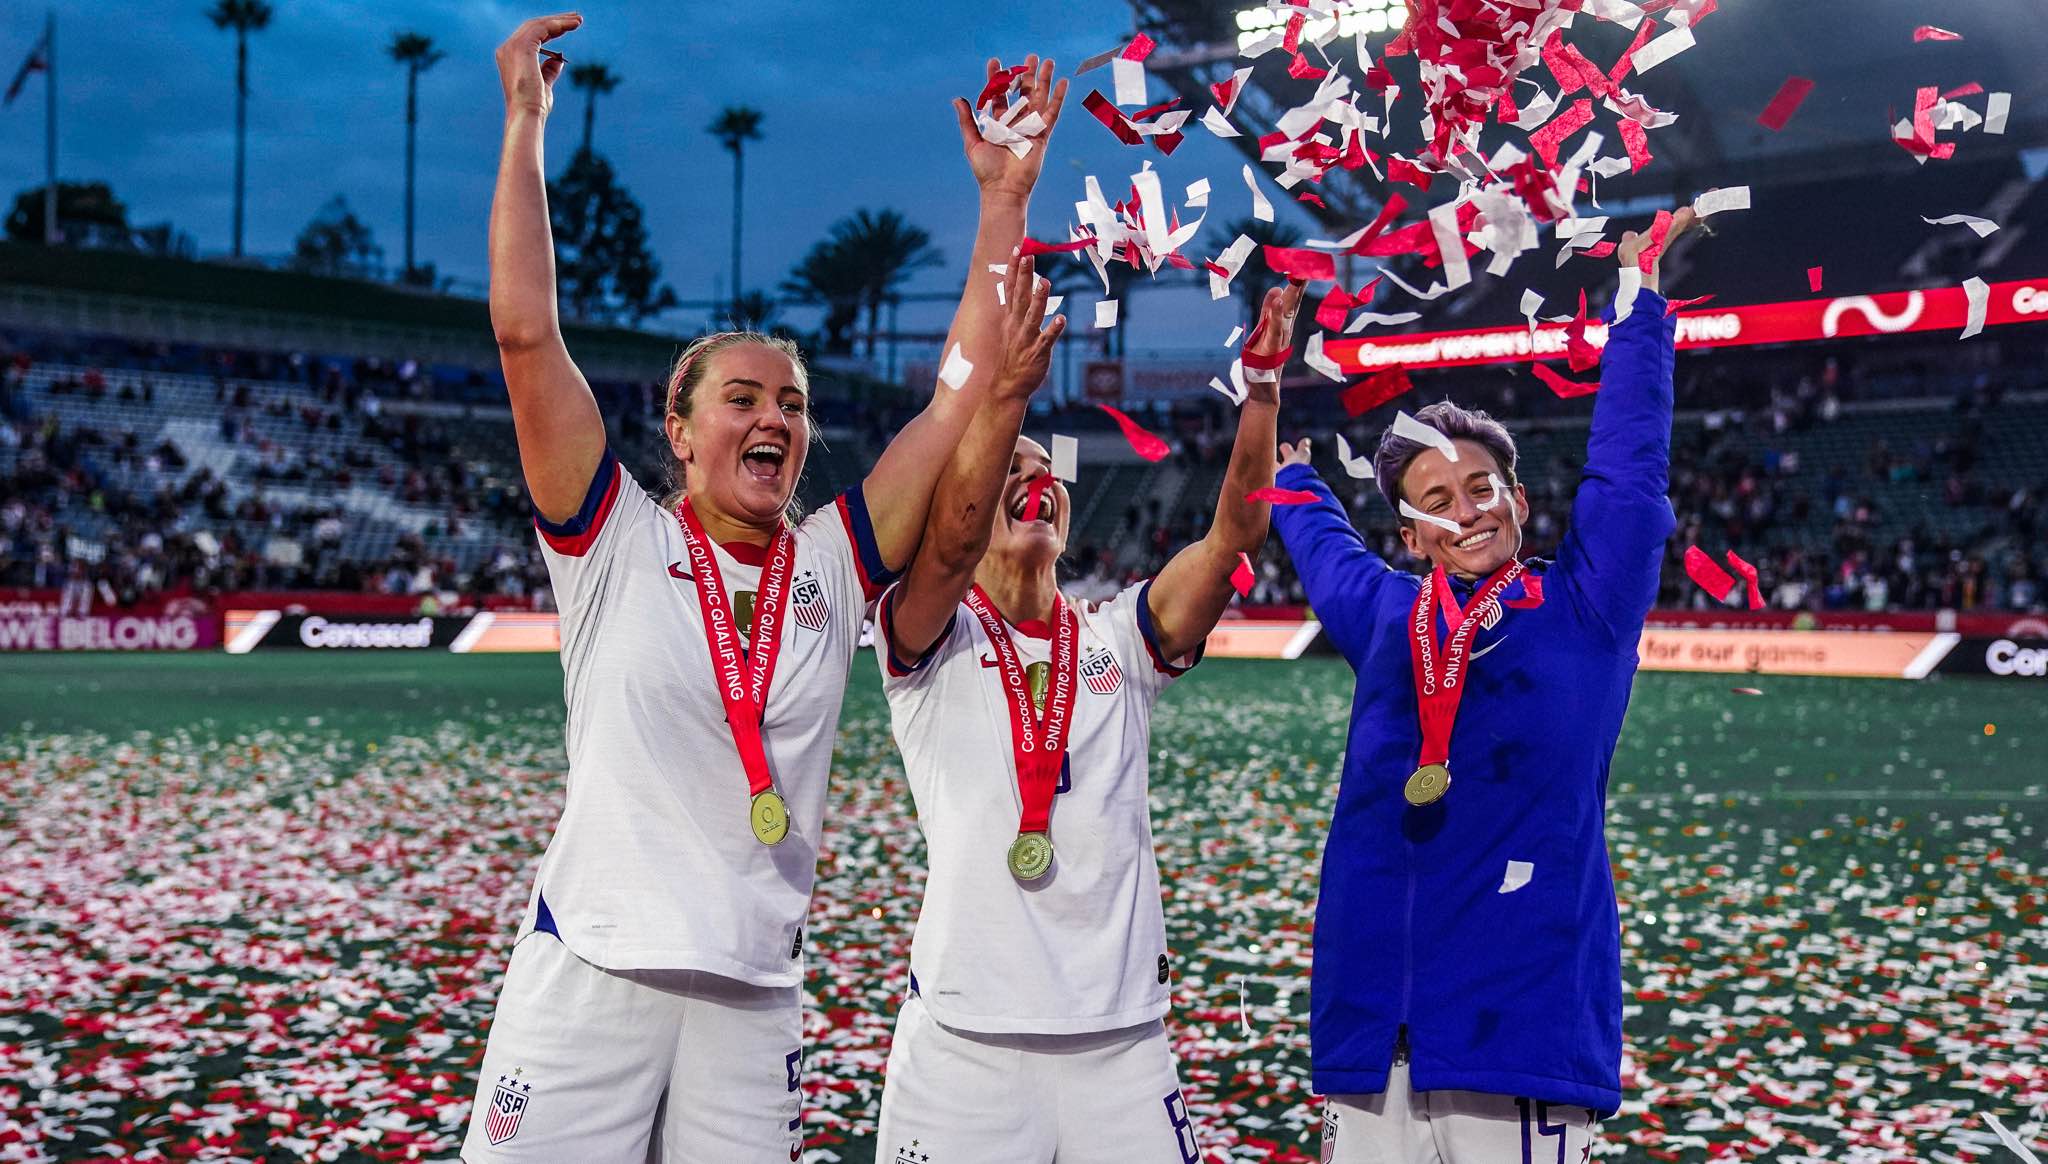 U.S. Soccer In Focus 7 2020 Women's Olympic Qualifying